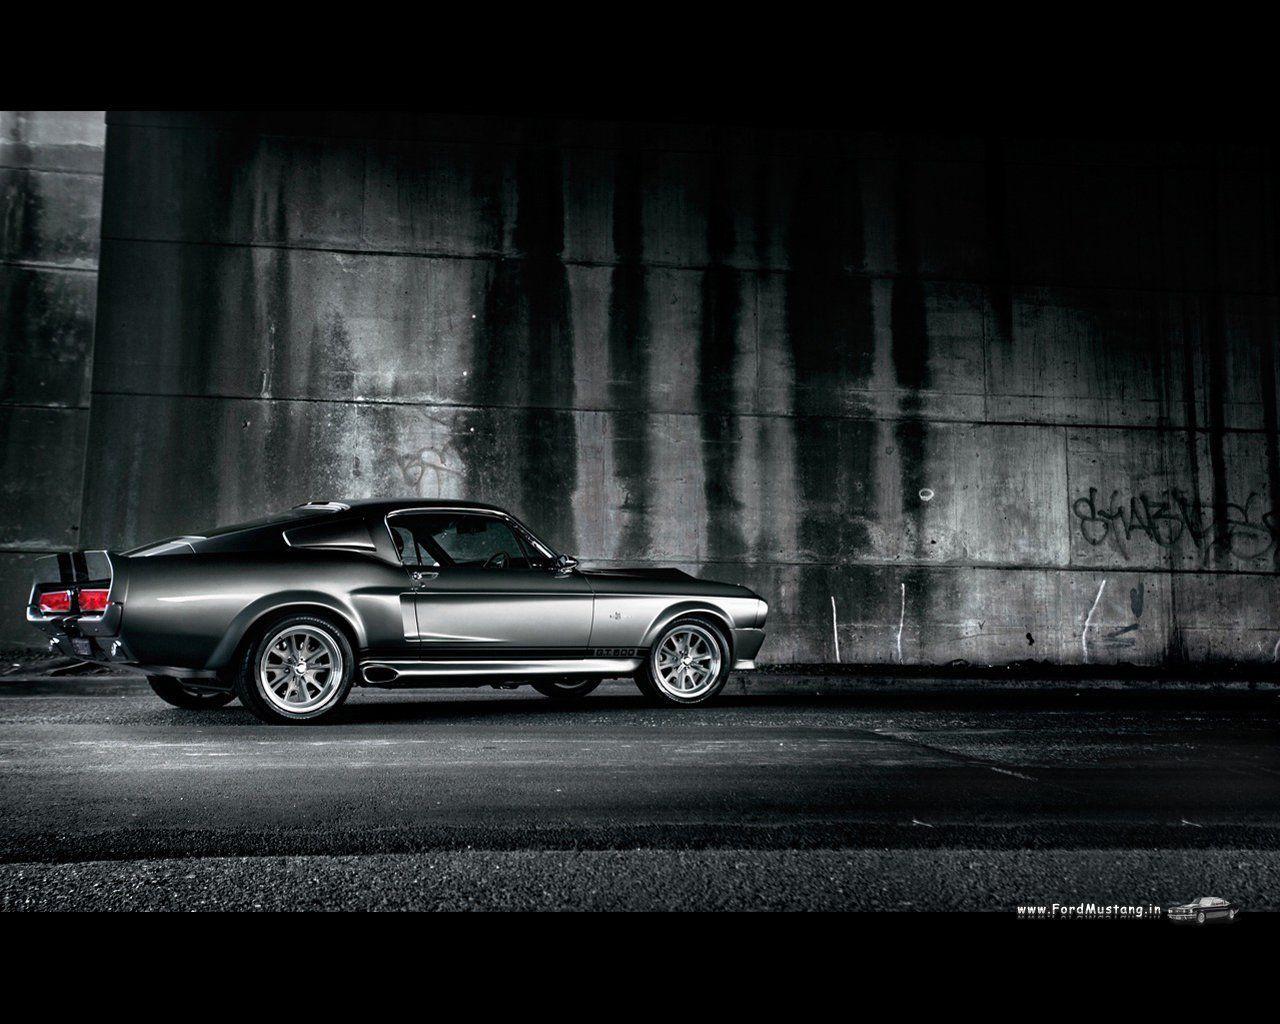 Mustang Shelby Gt500 Wallpaper